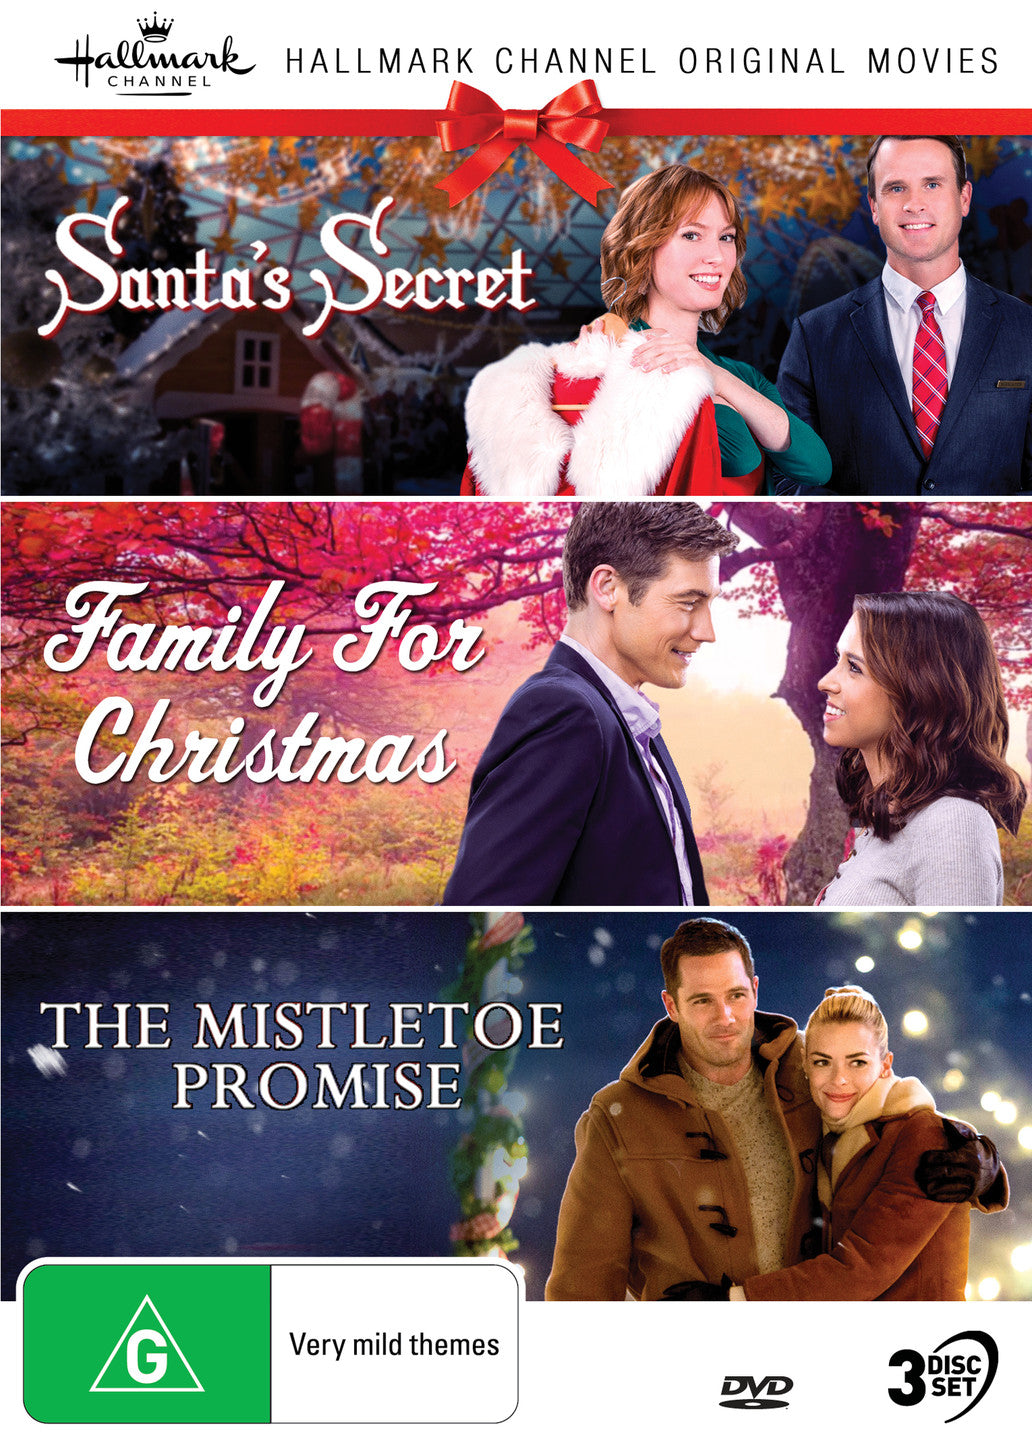 HALLMARK CHRISTMAS 10: SANTA'S SECRET (AKA CHRISTMAS AT CARTWRIGHTS) / FAMILY FOR CHRISTMAS / THE MISTLETOE PROMISE